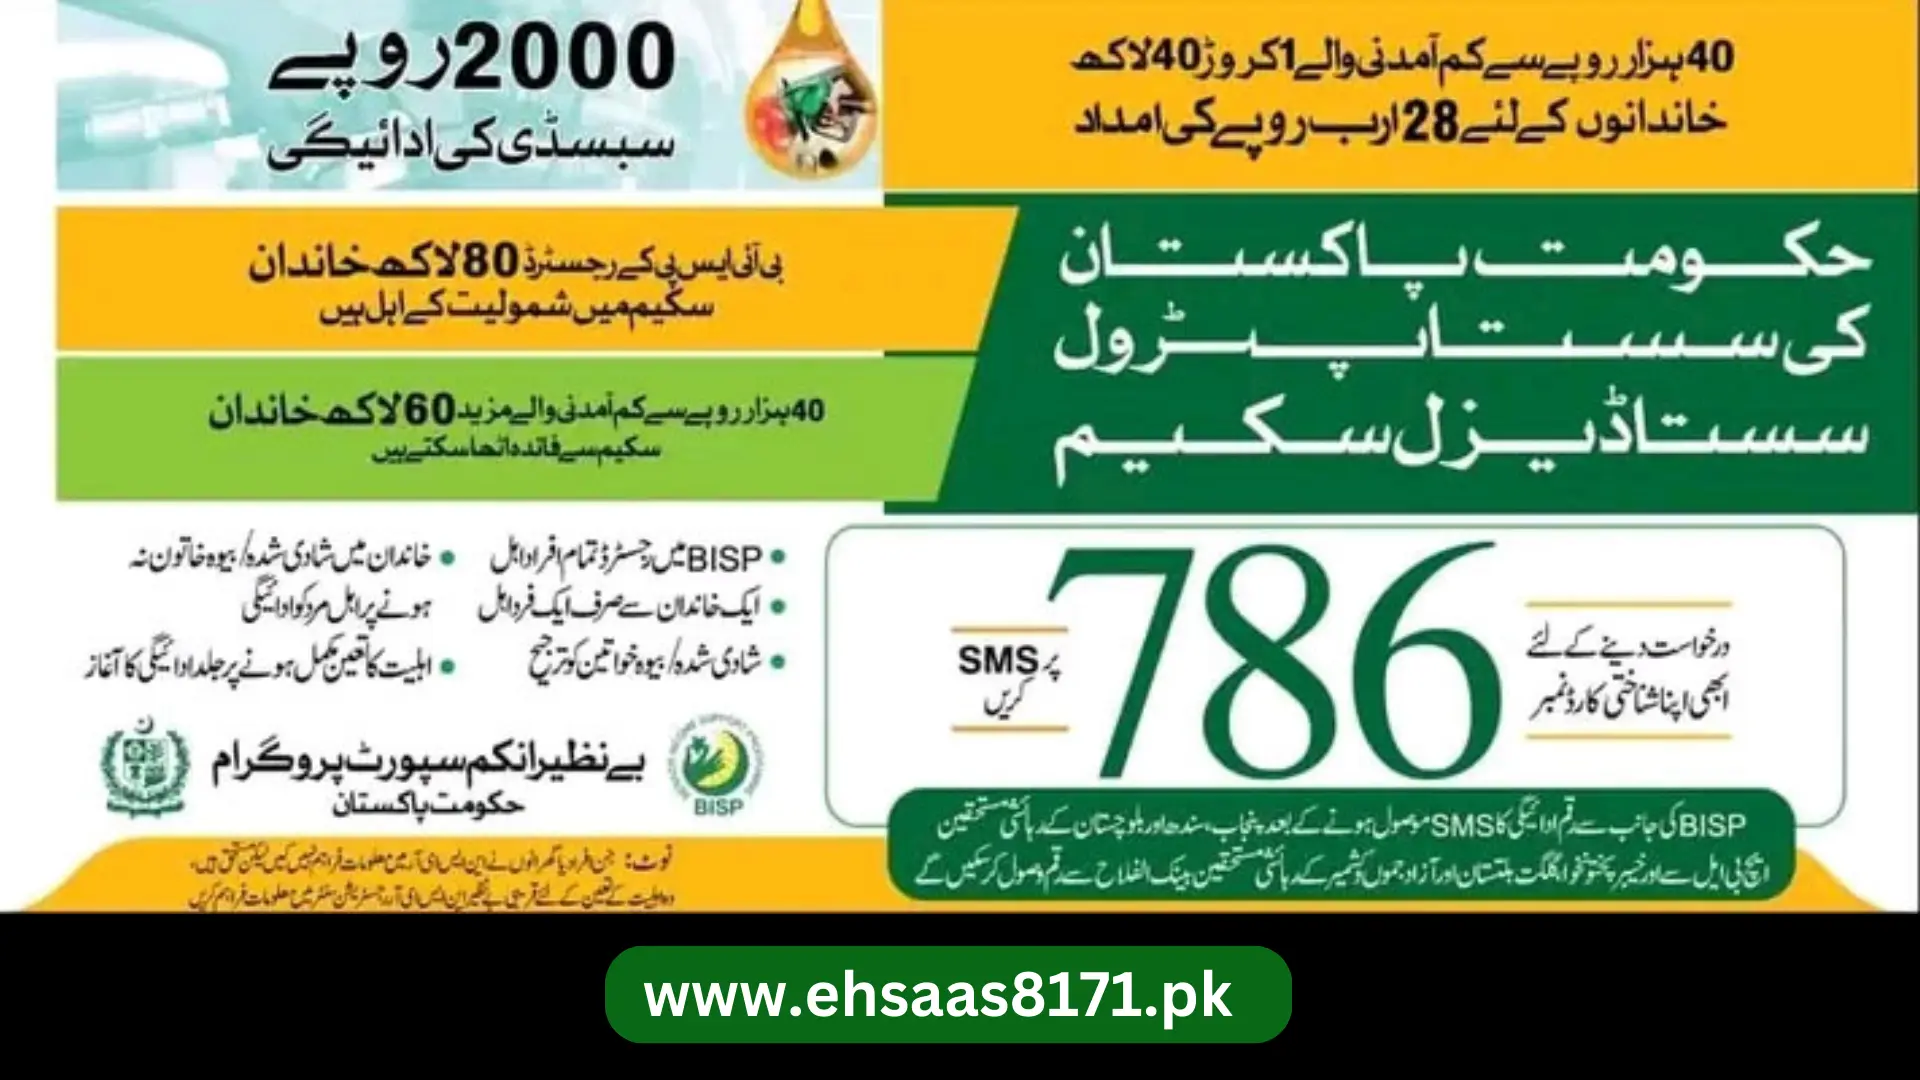 Online registration of Ehsaas 786 program